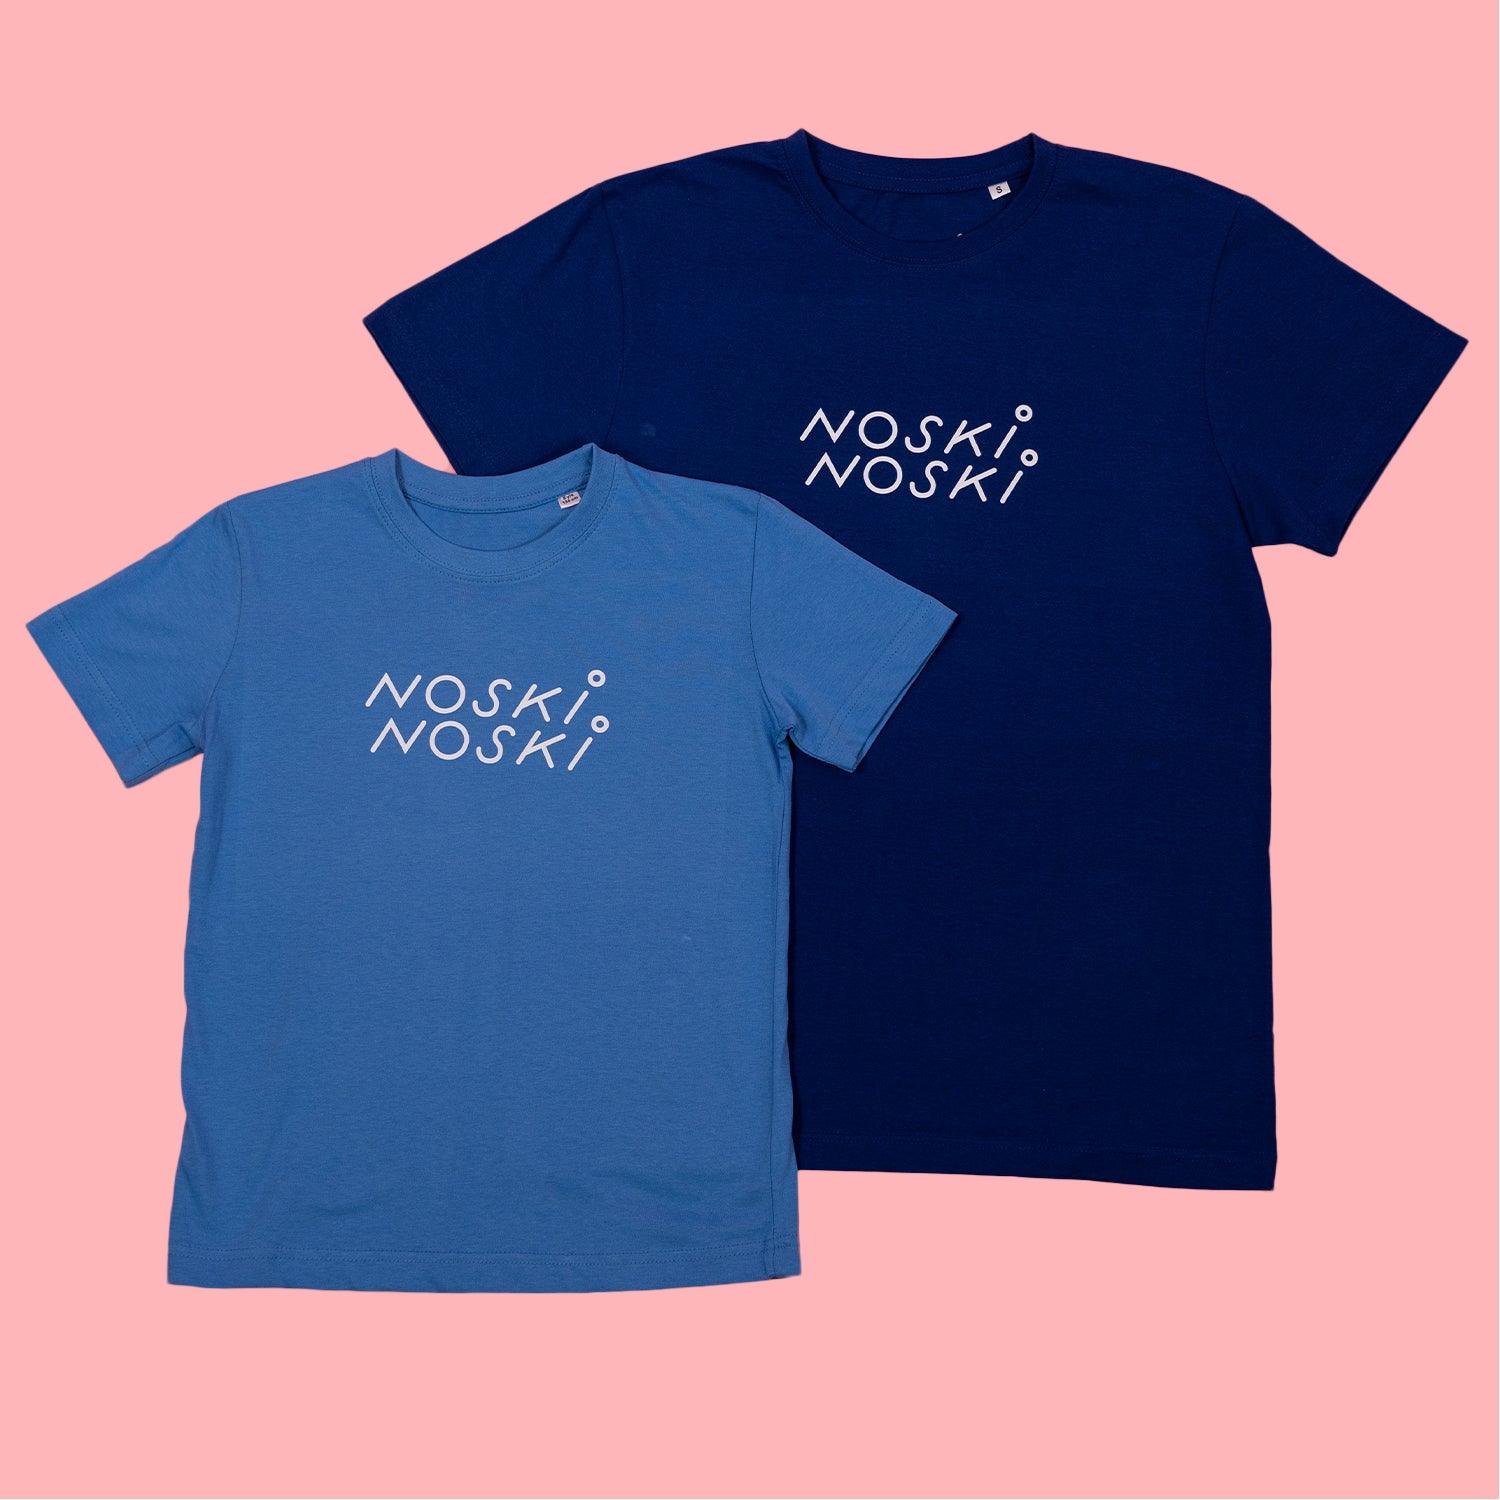 Noski noski: nn camisa de bebé